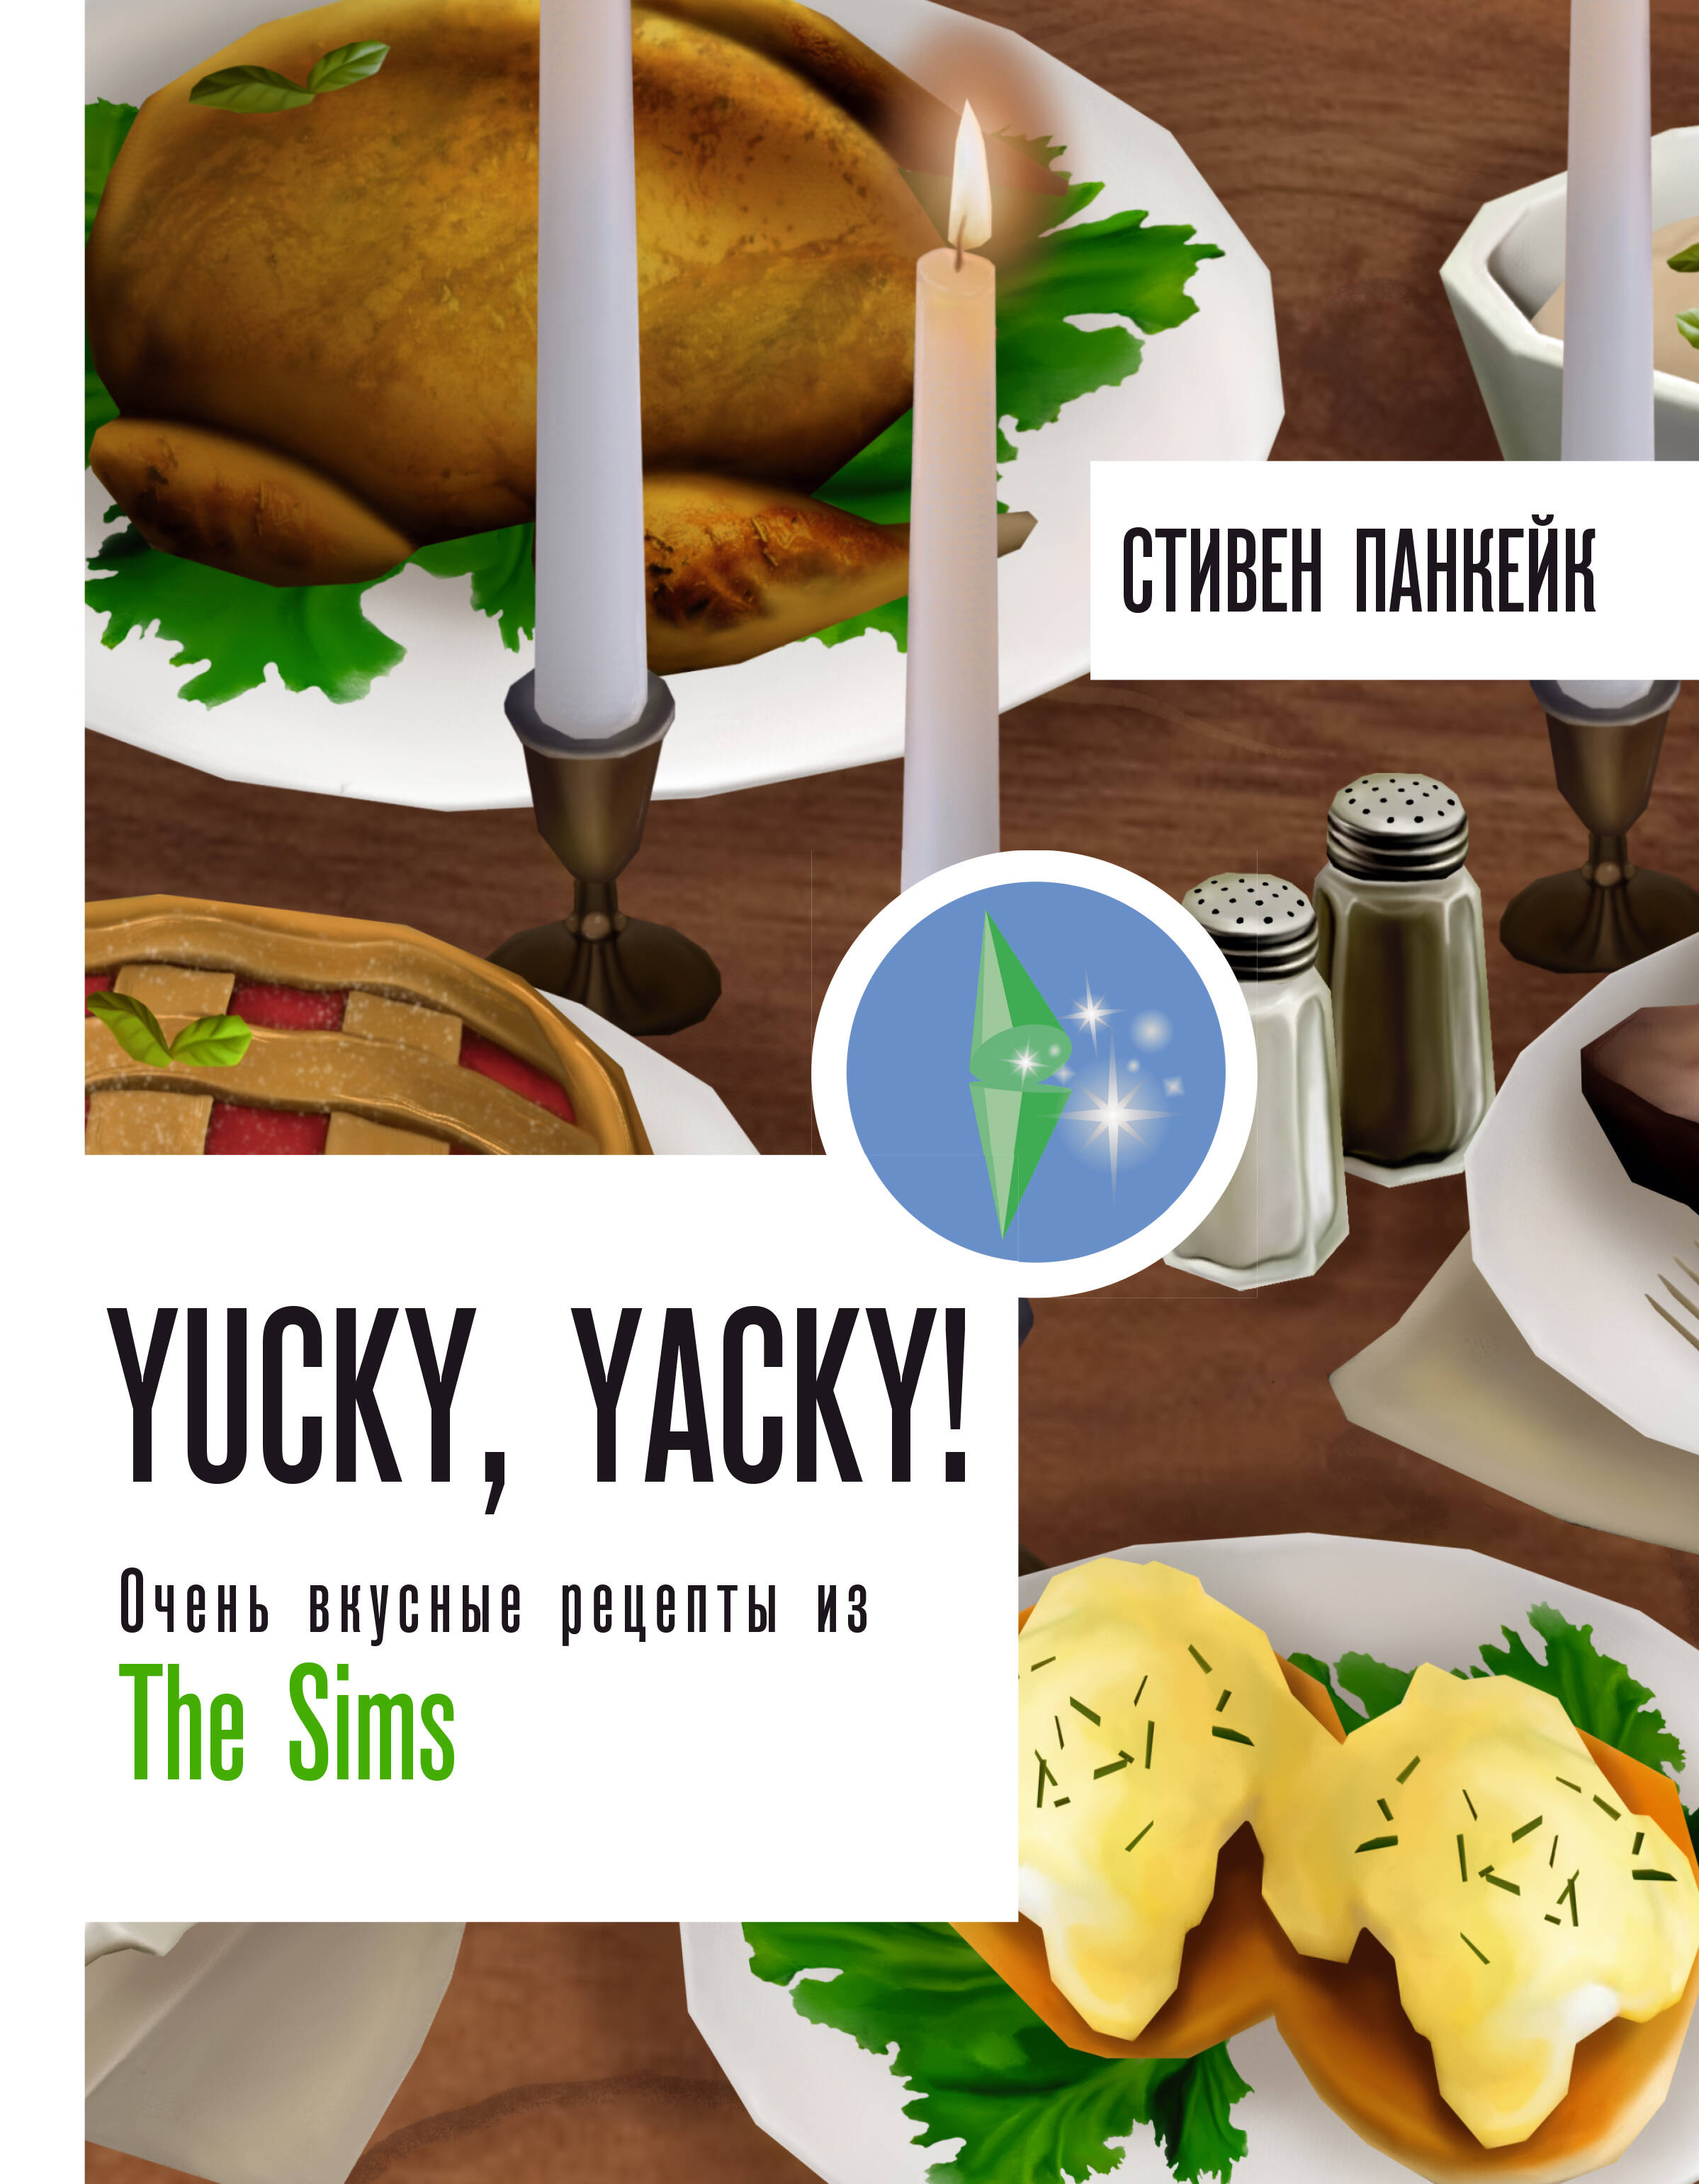 Yucky, yacky!     The Sims